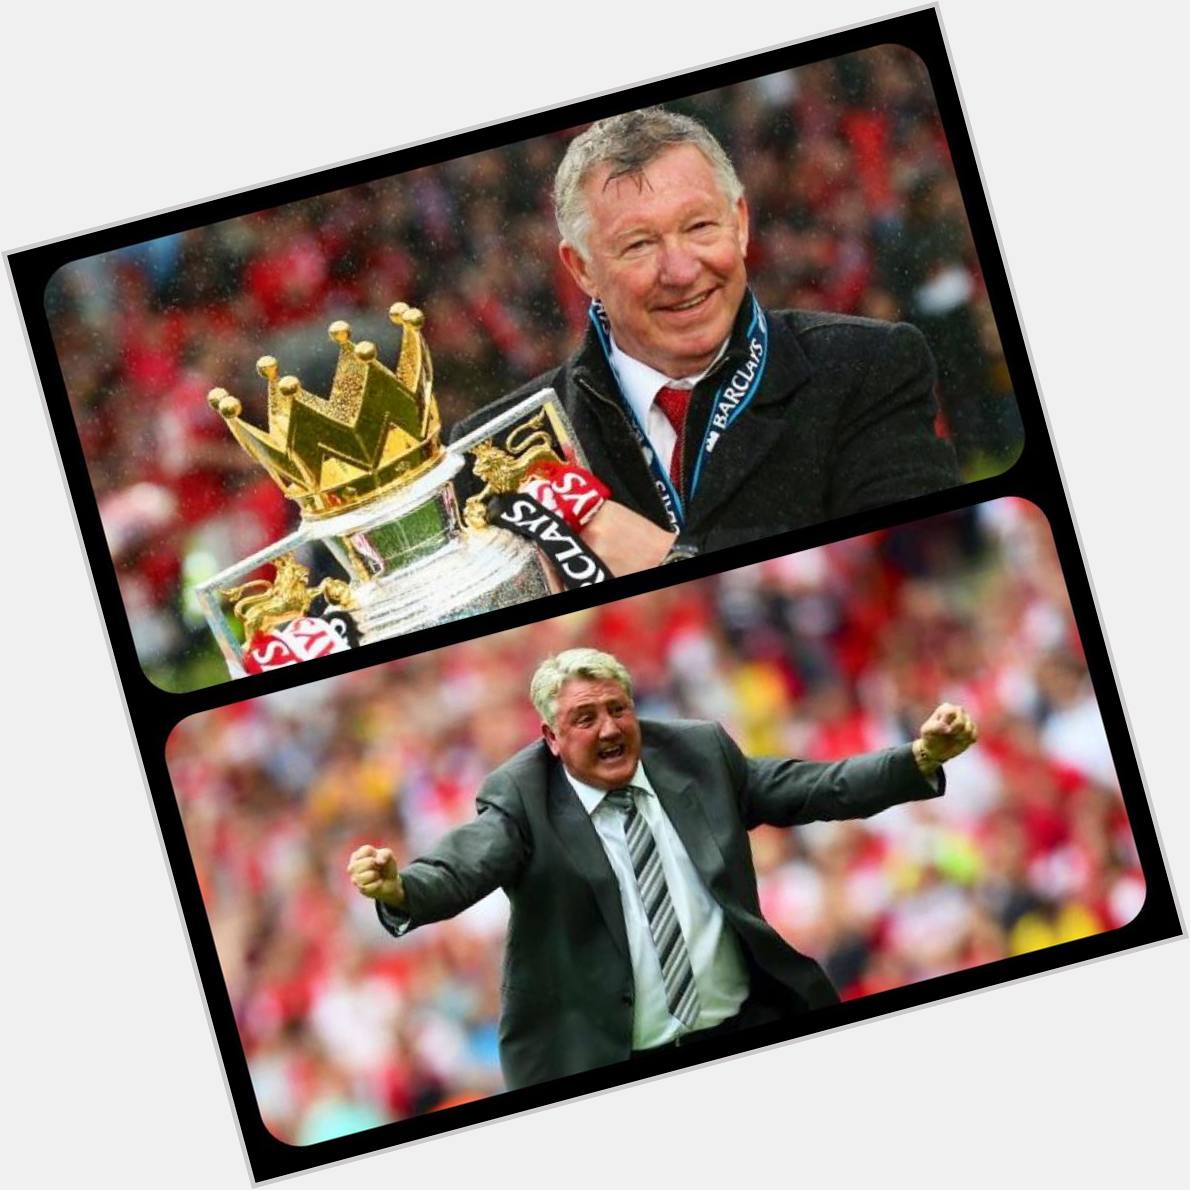 HAPPY BIRTHDAY! To Manchester United\s legendary manager, Sir Alex Ferguson, & Hull manager Steve Bruce!  